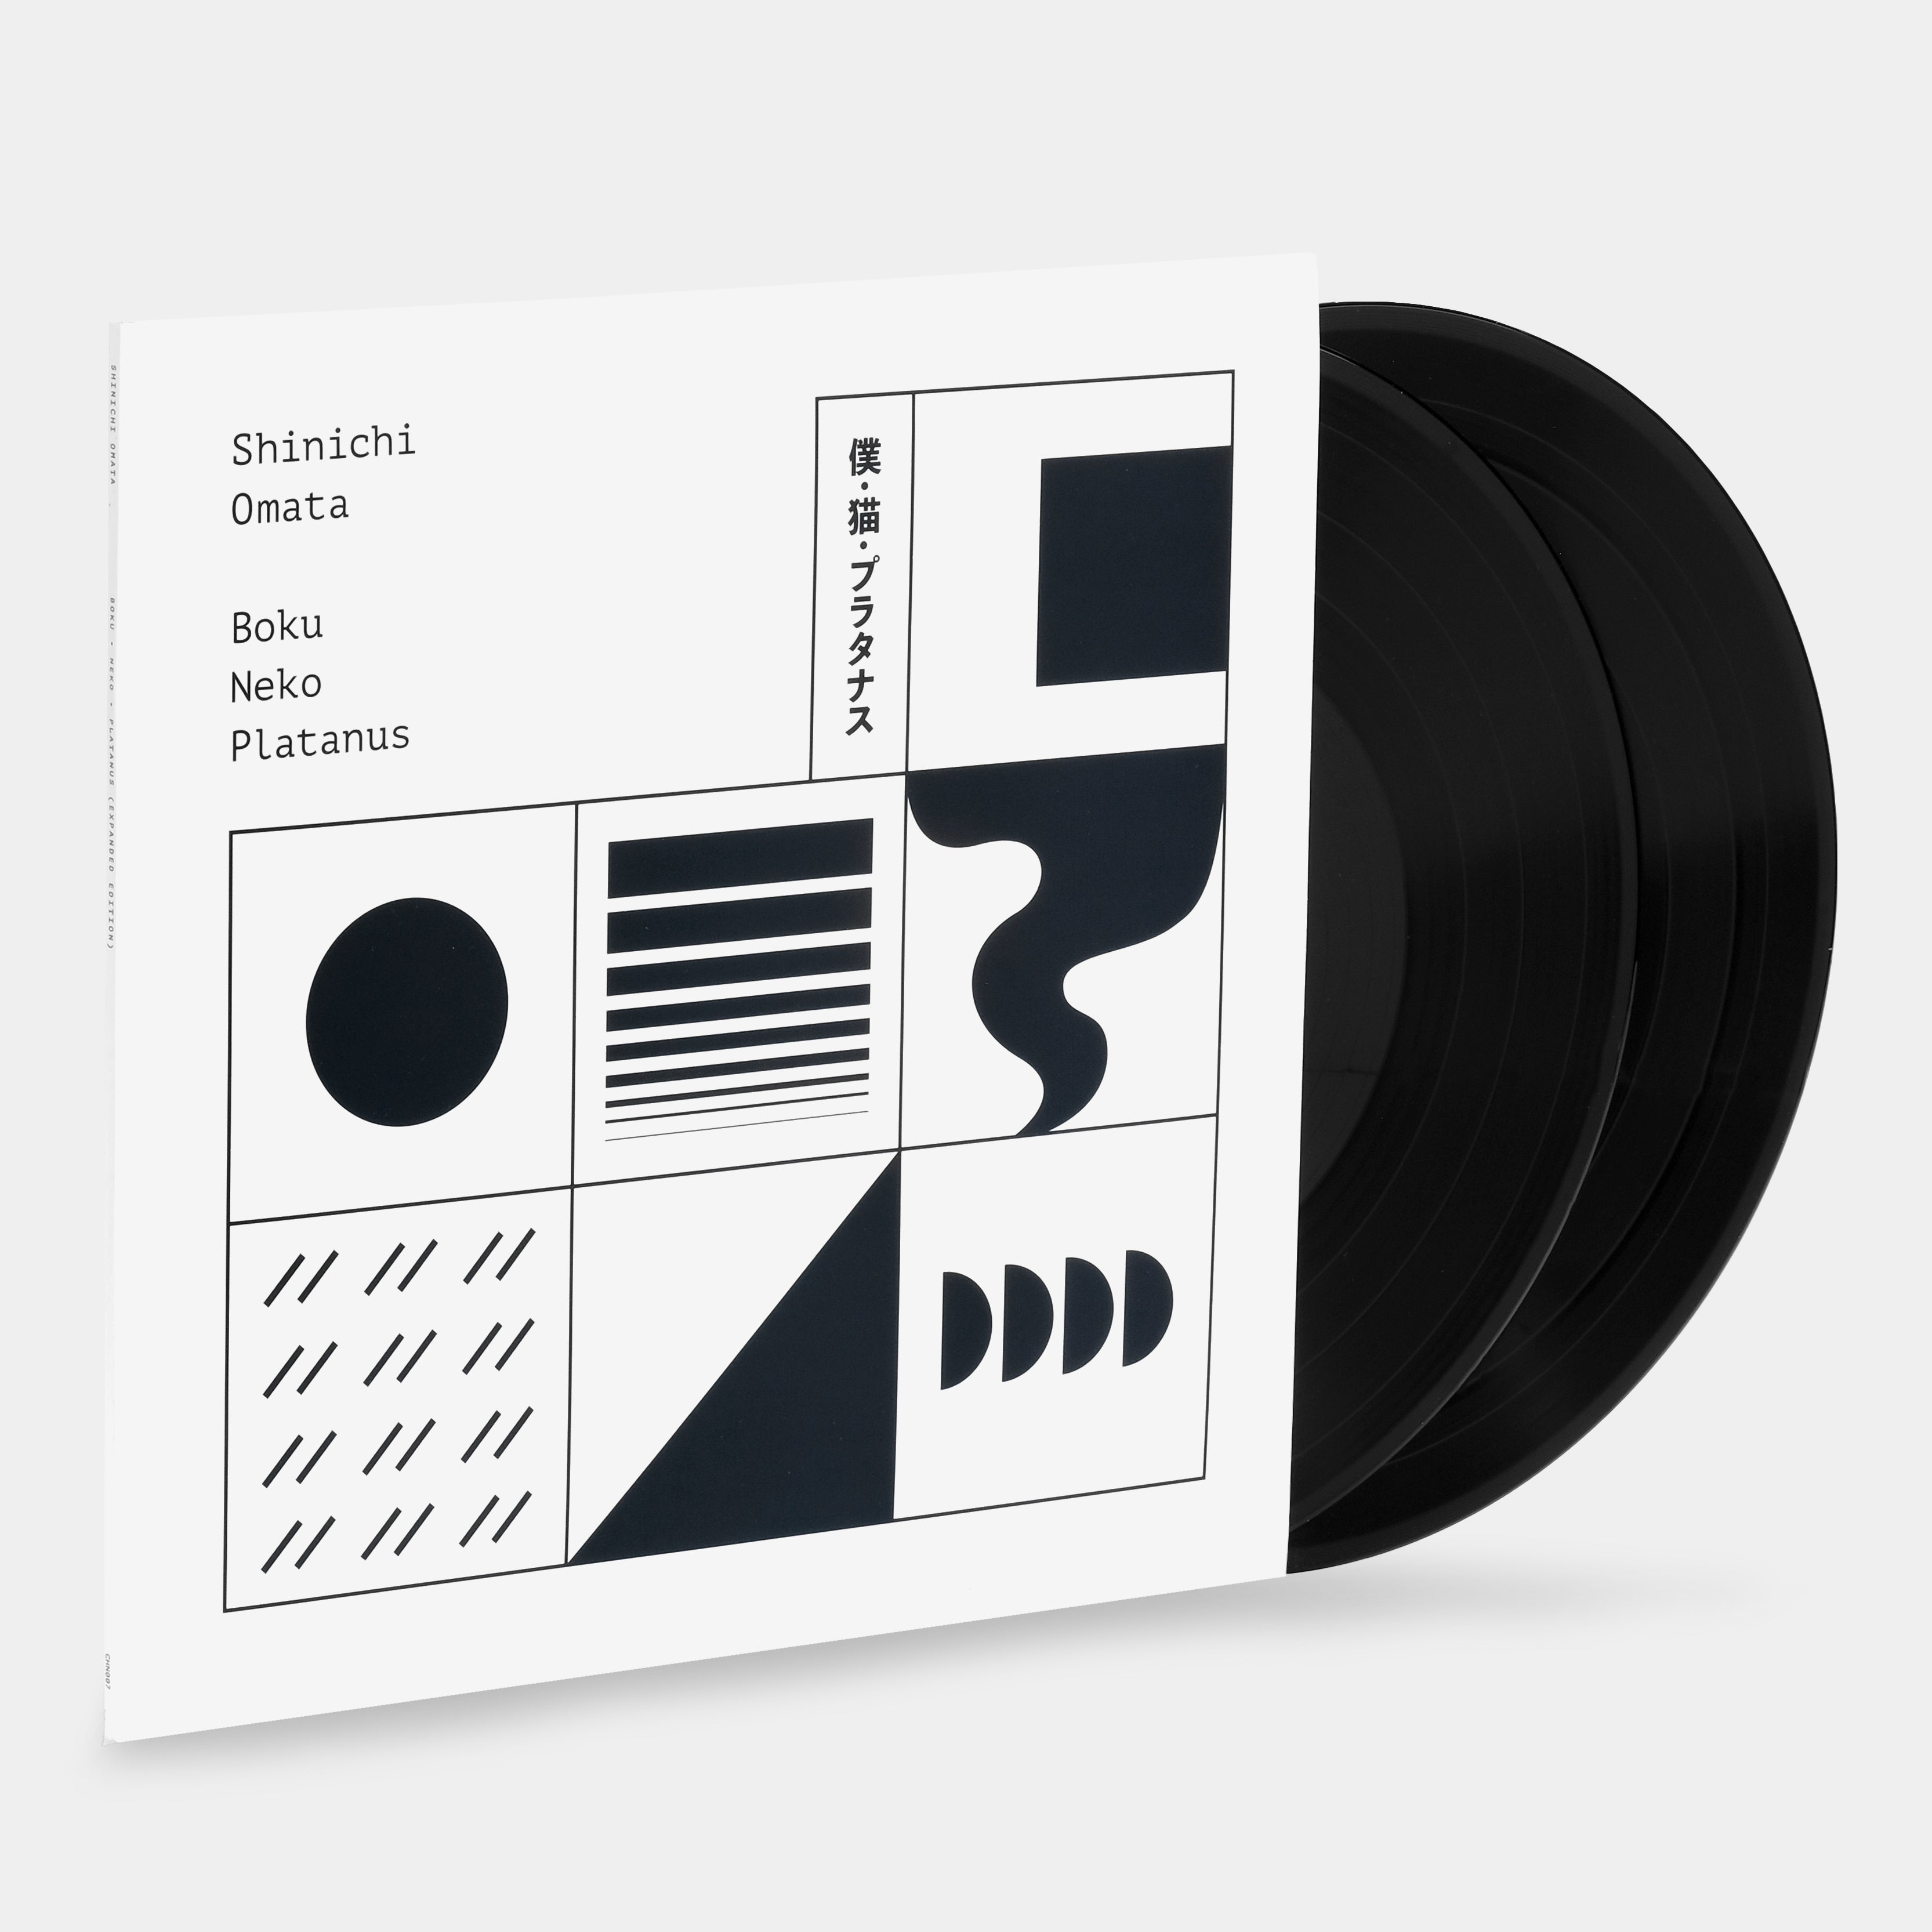 Shinichi Omata - Boku, Neko, Platanus (Expanded Edition) 2xLP Vinyl Record